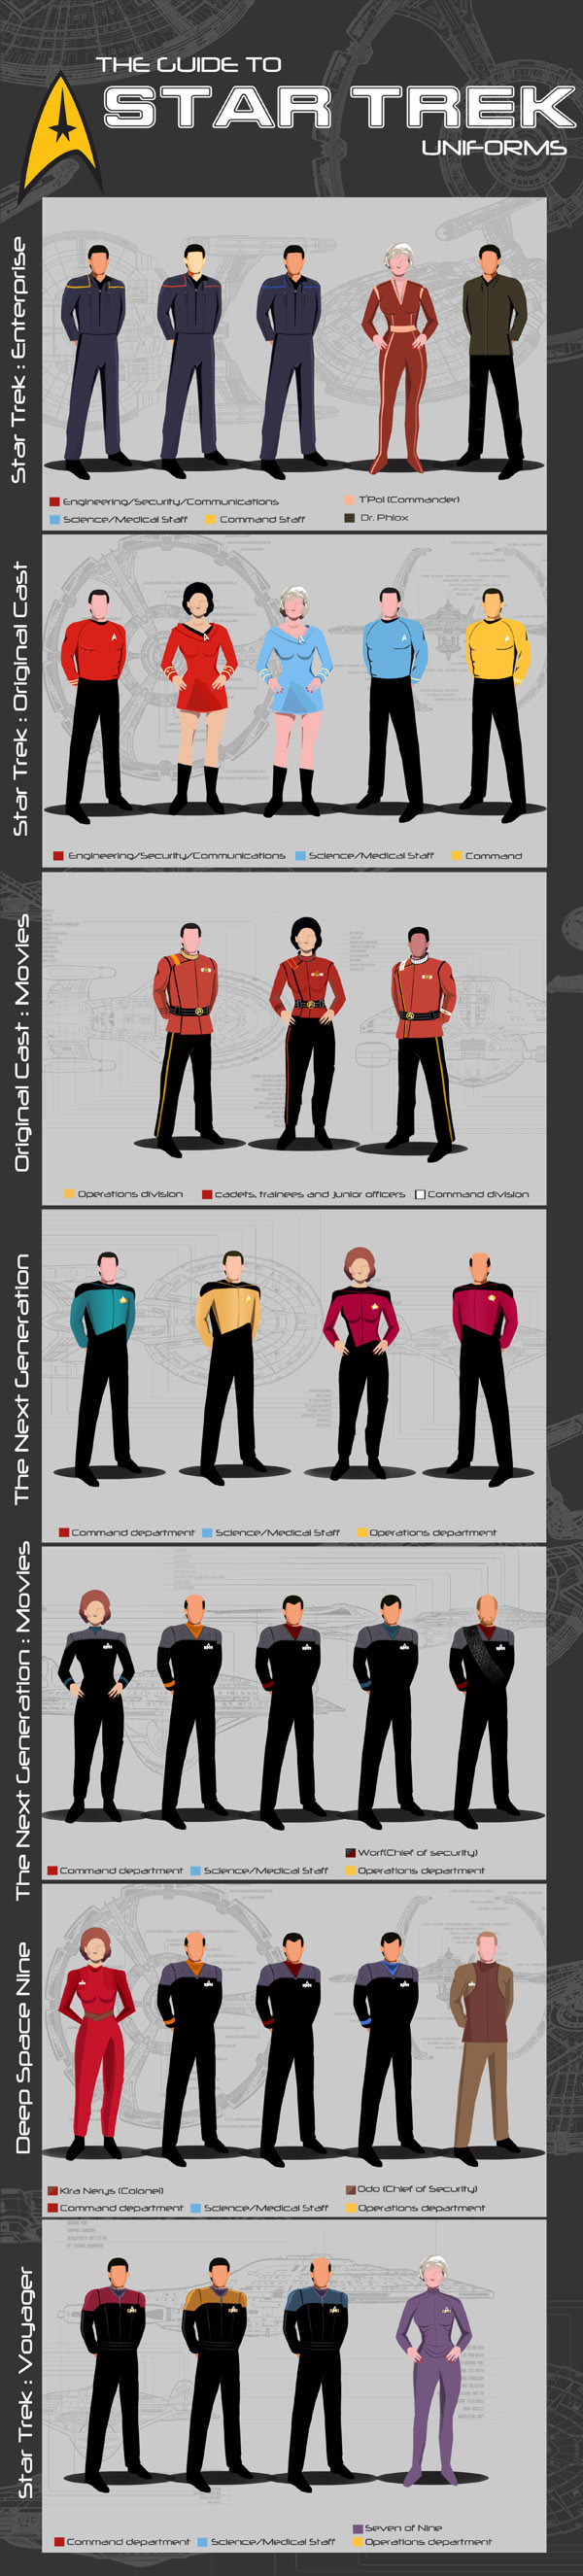 A Guide to Star Trek Uniforms